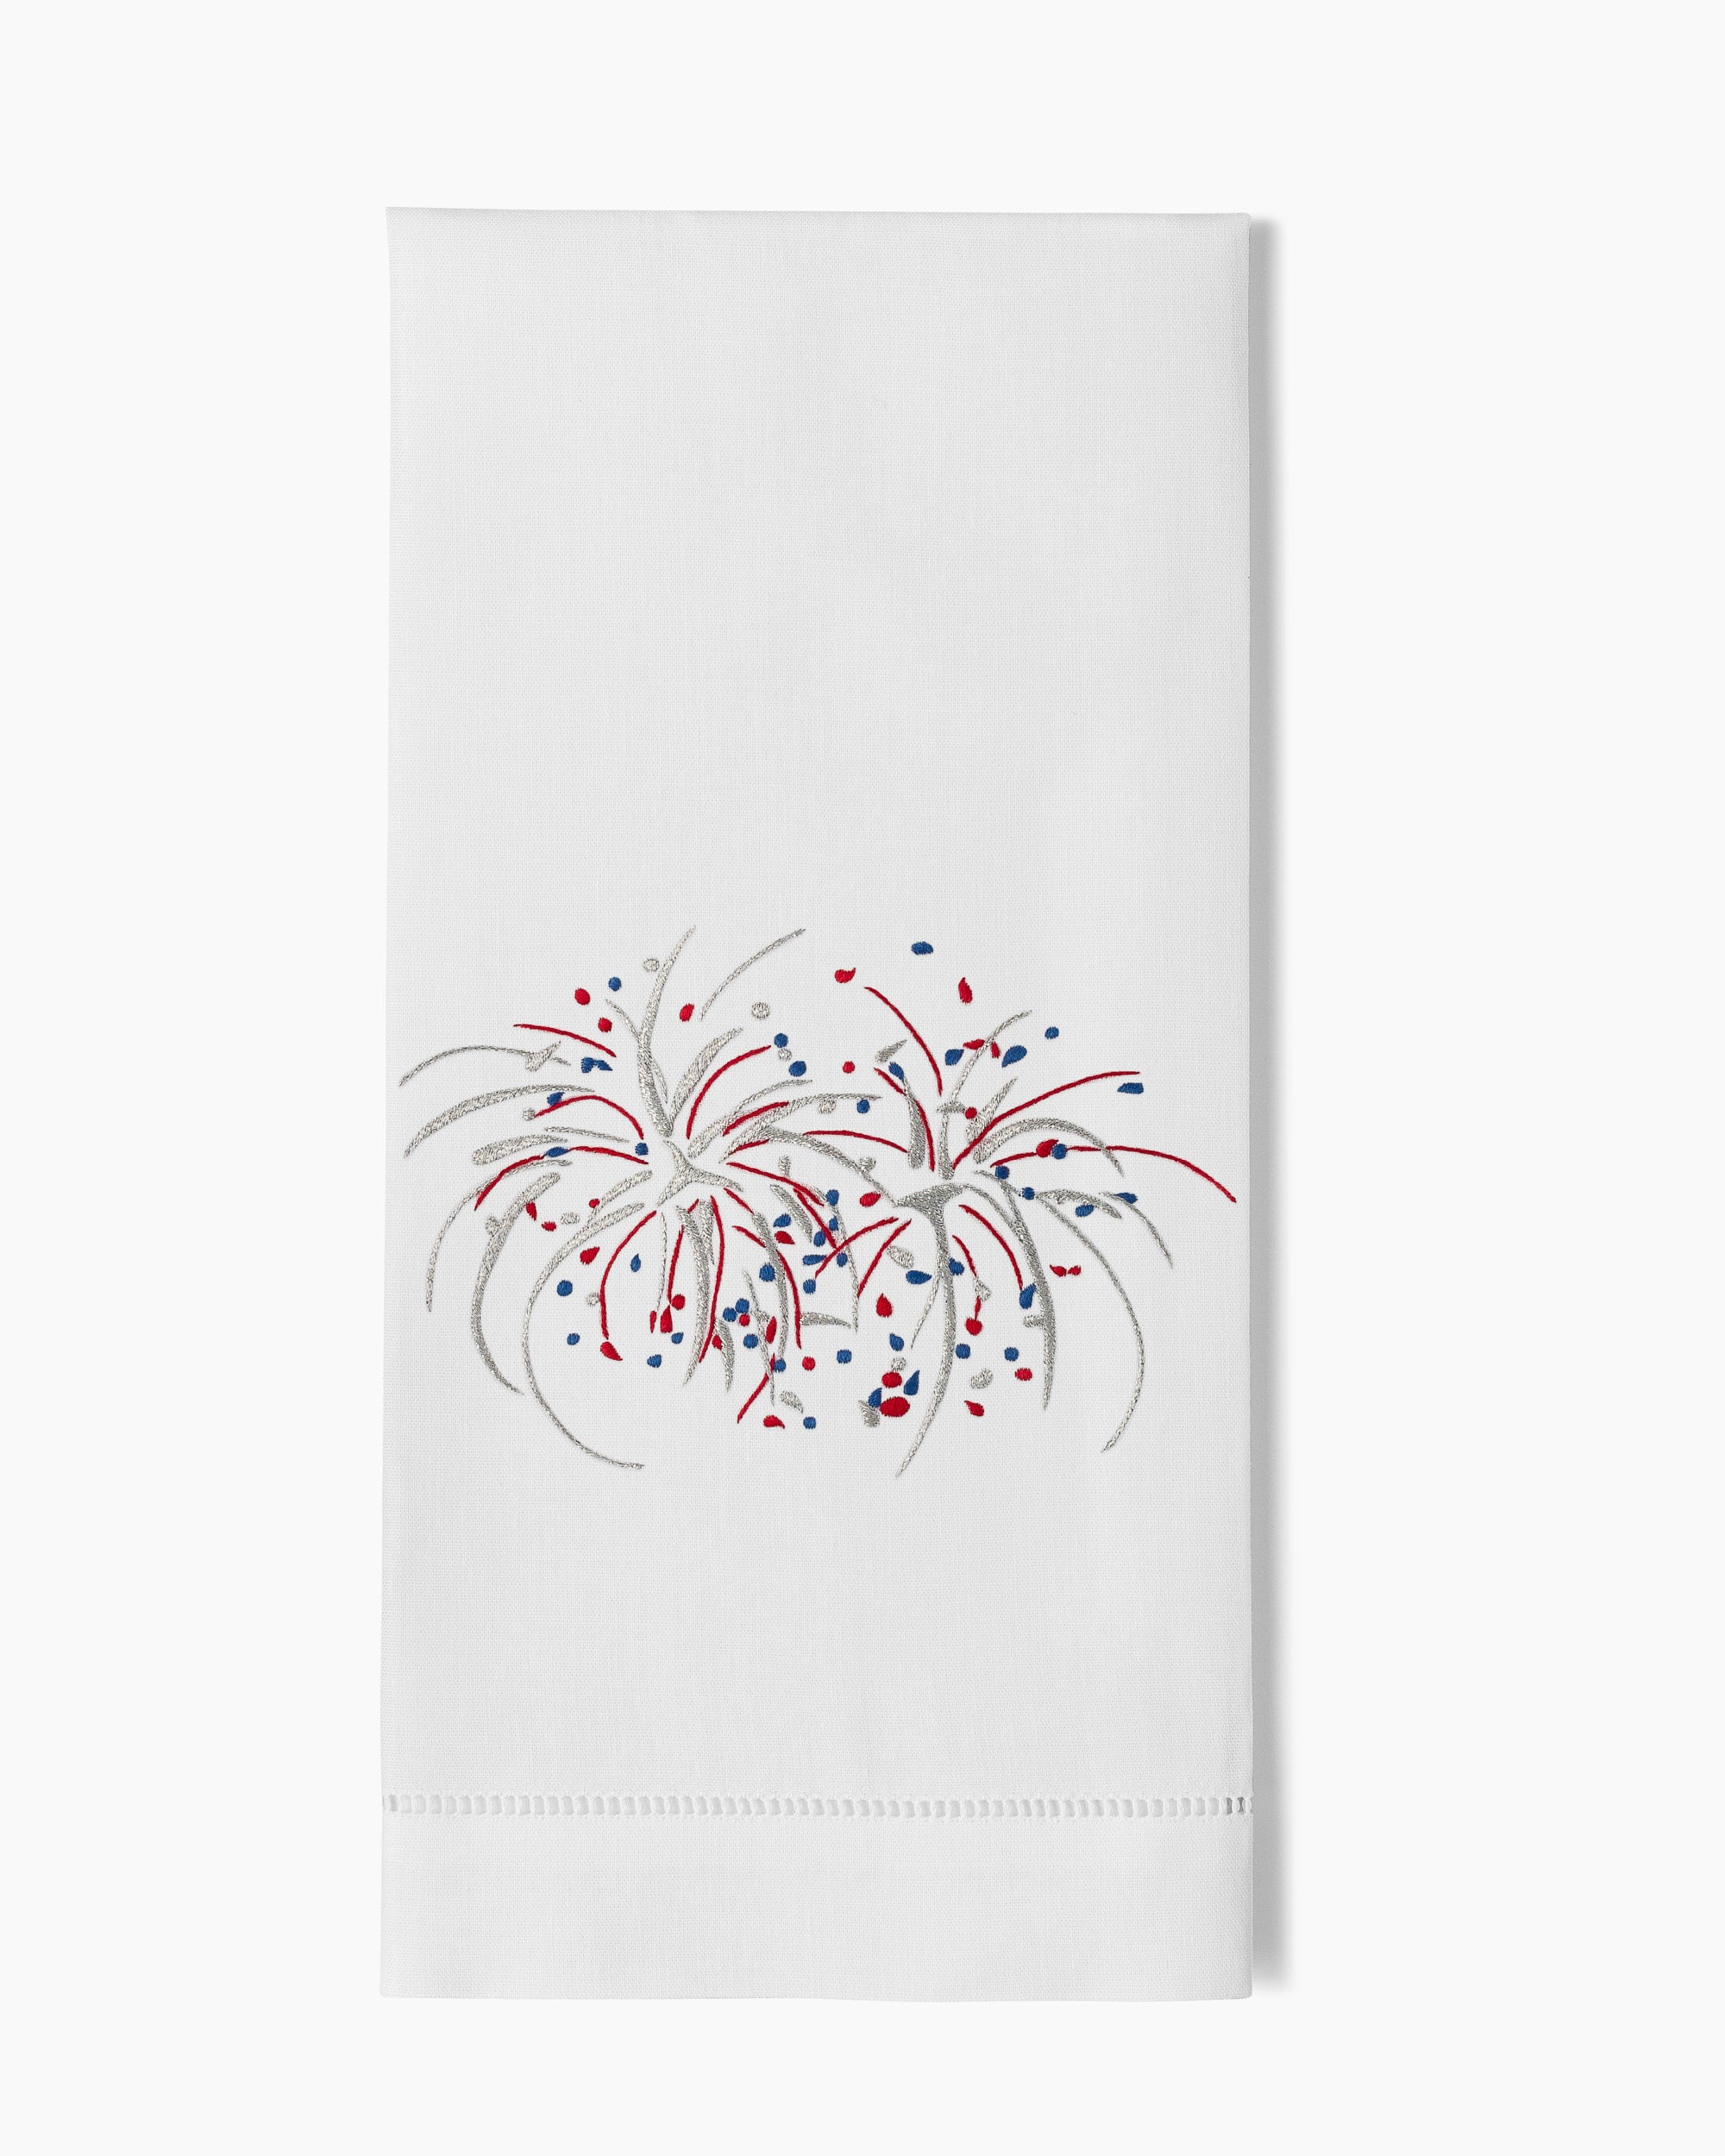 Firework design on white background